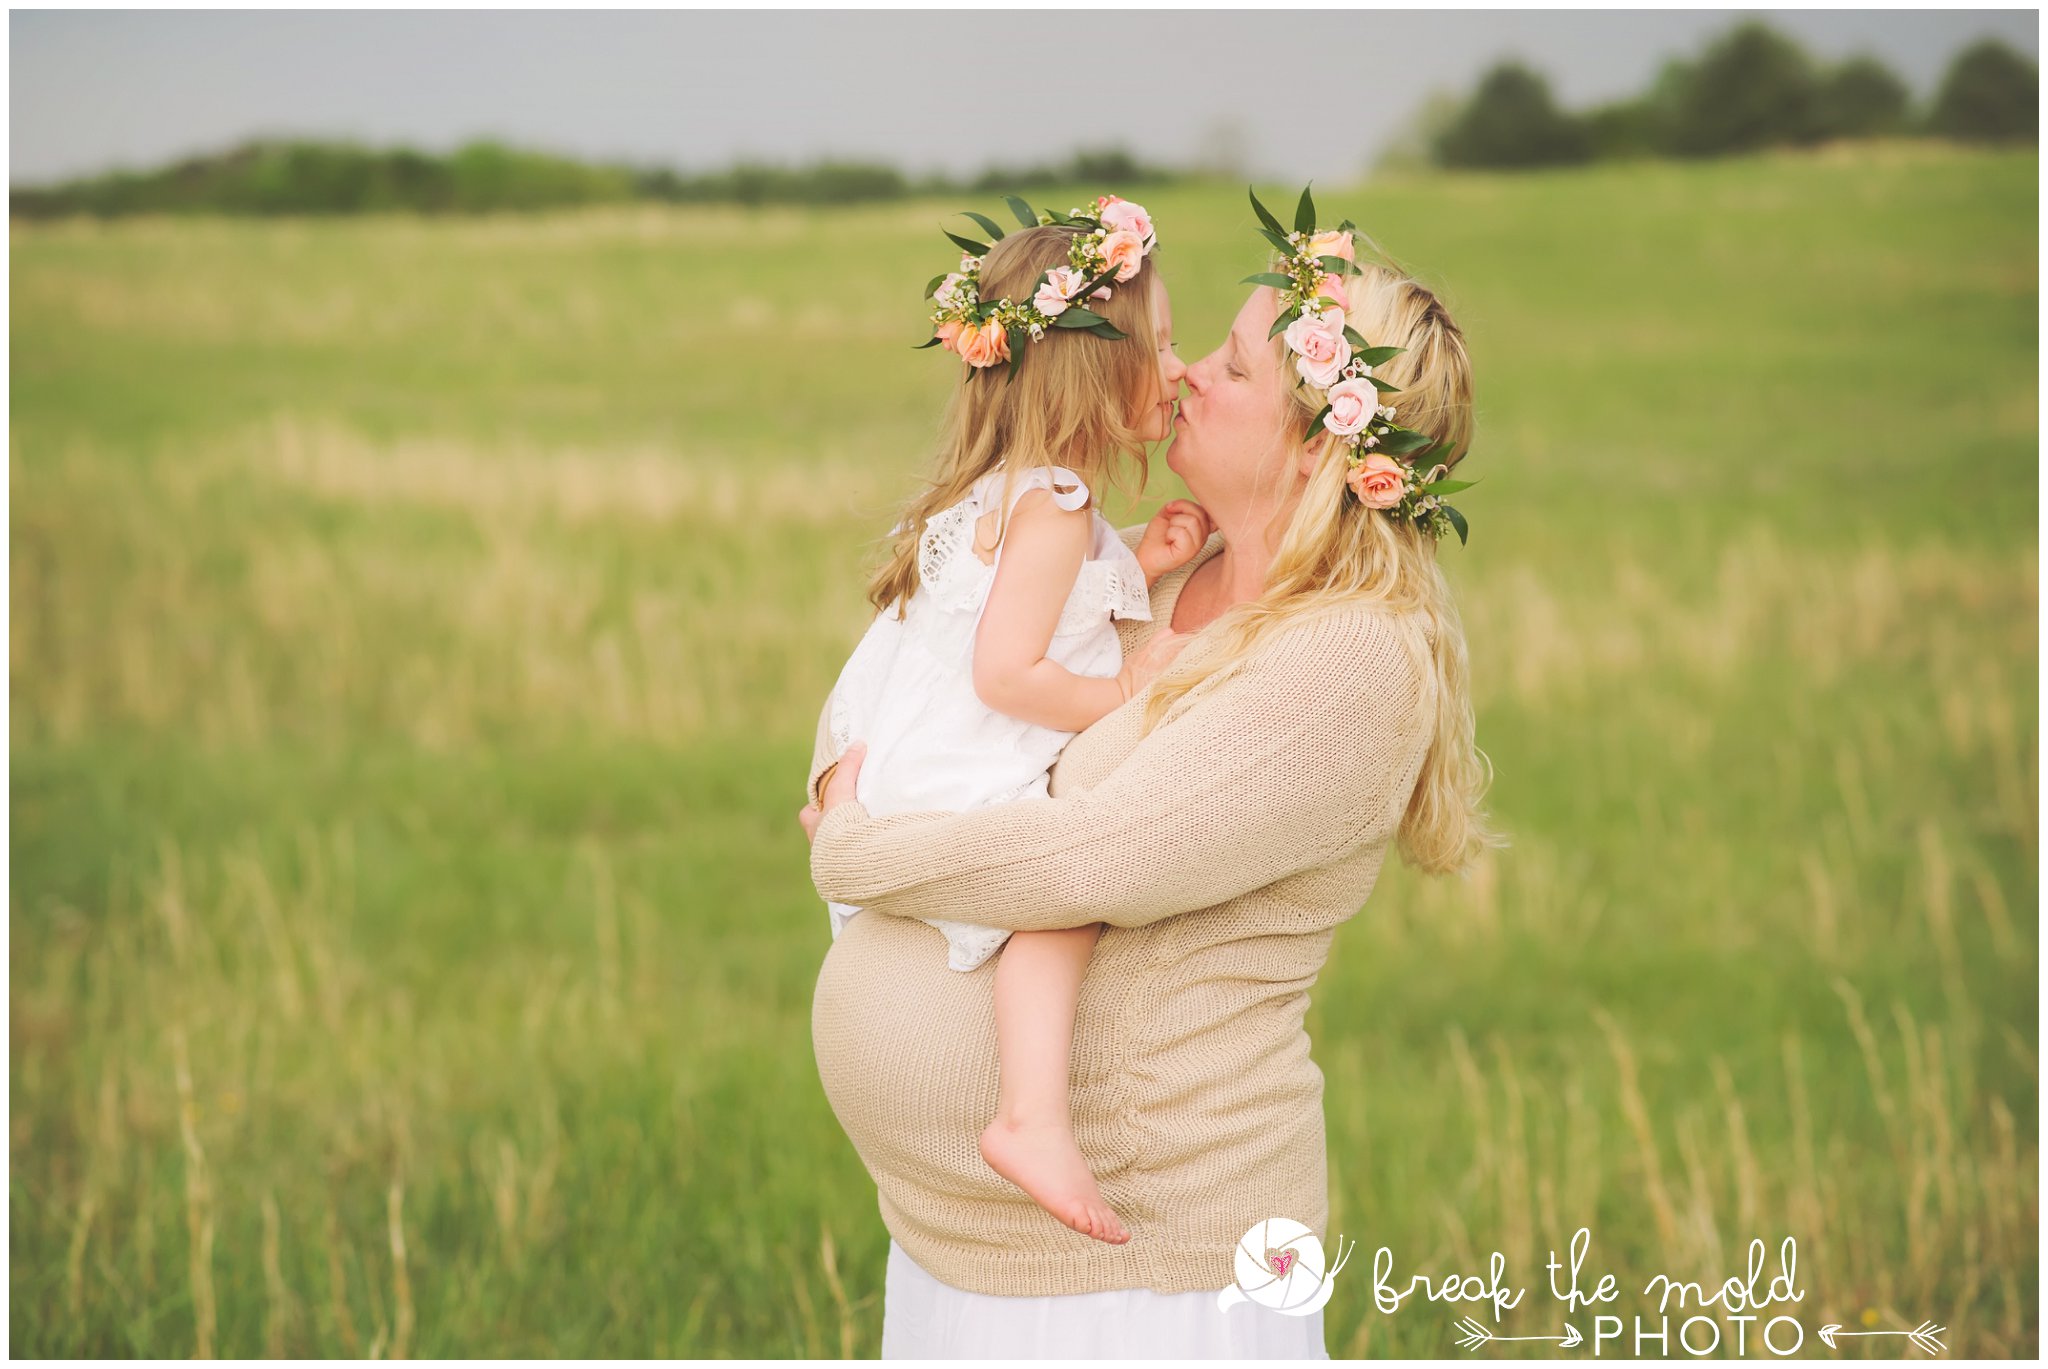 break-the-mold-photo-maternity-field-mommy-me-flower-floral-crown_2159.jpg